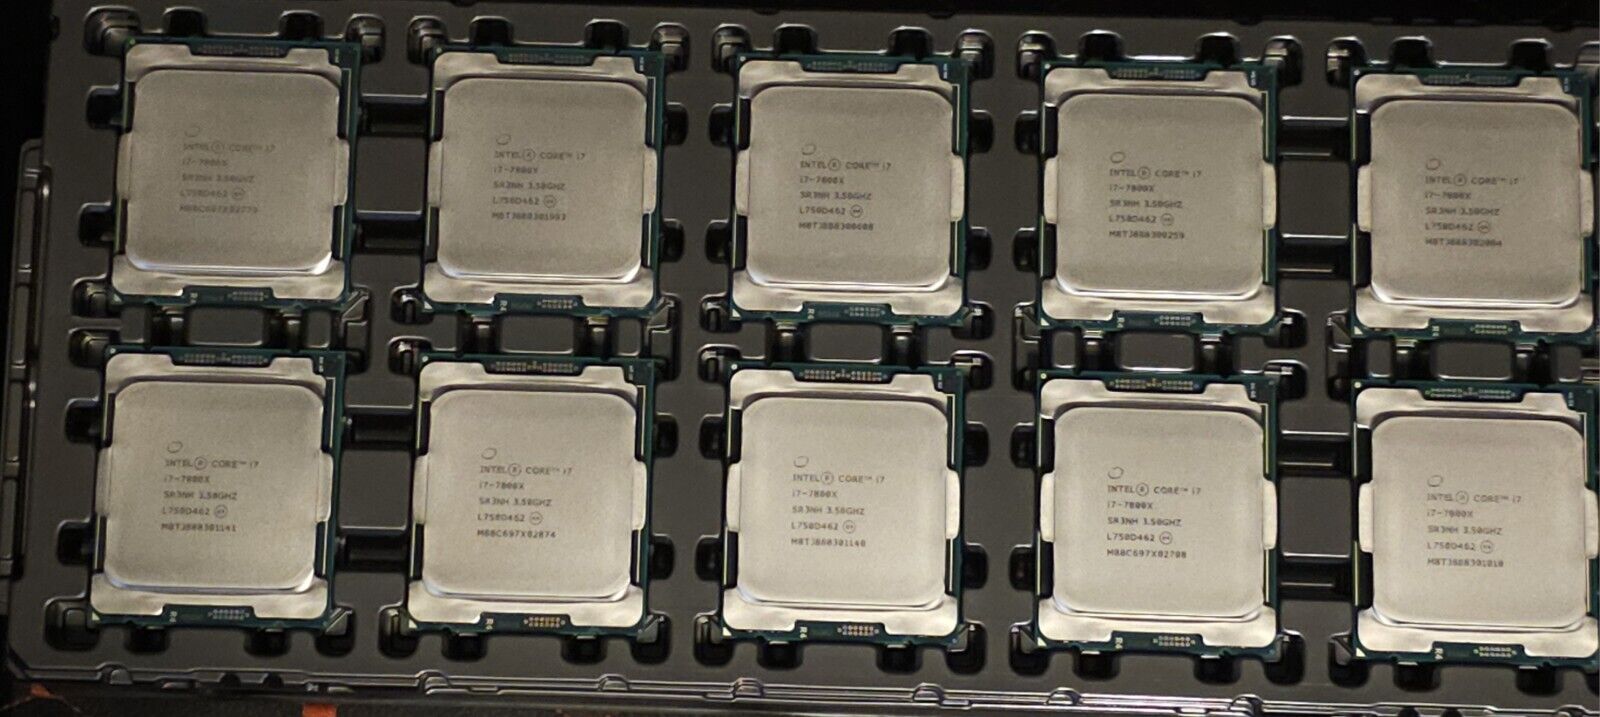 Intel Core i7-7800x CPU processor sr3nh 3.50ghz 6-Core 8.25mb lga-2066 X series